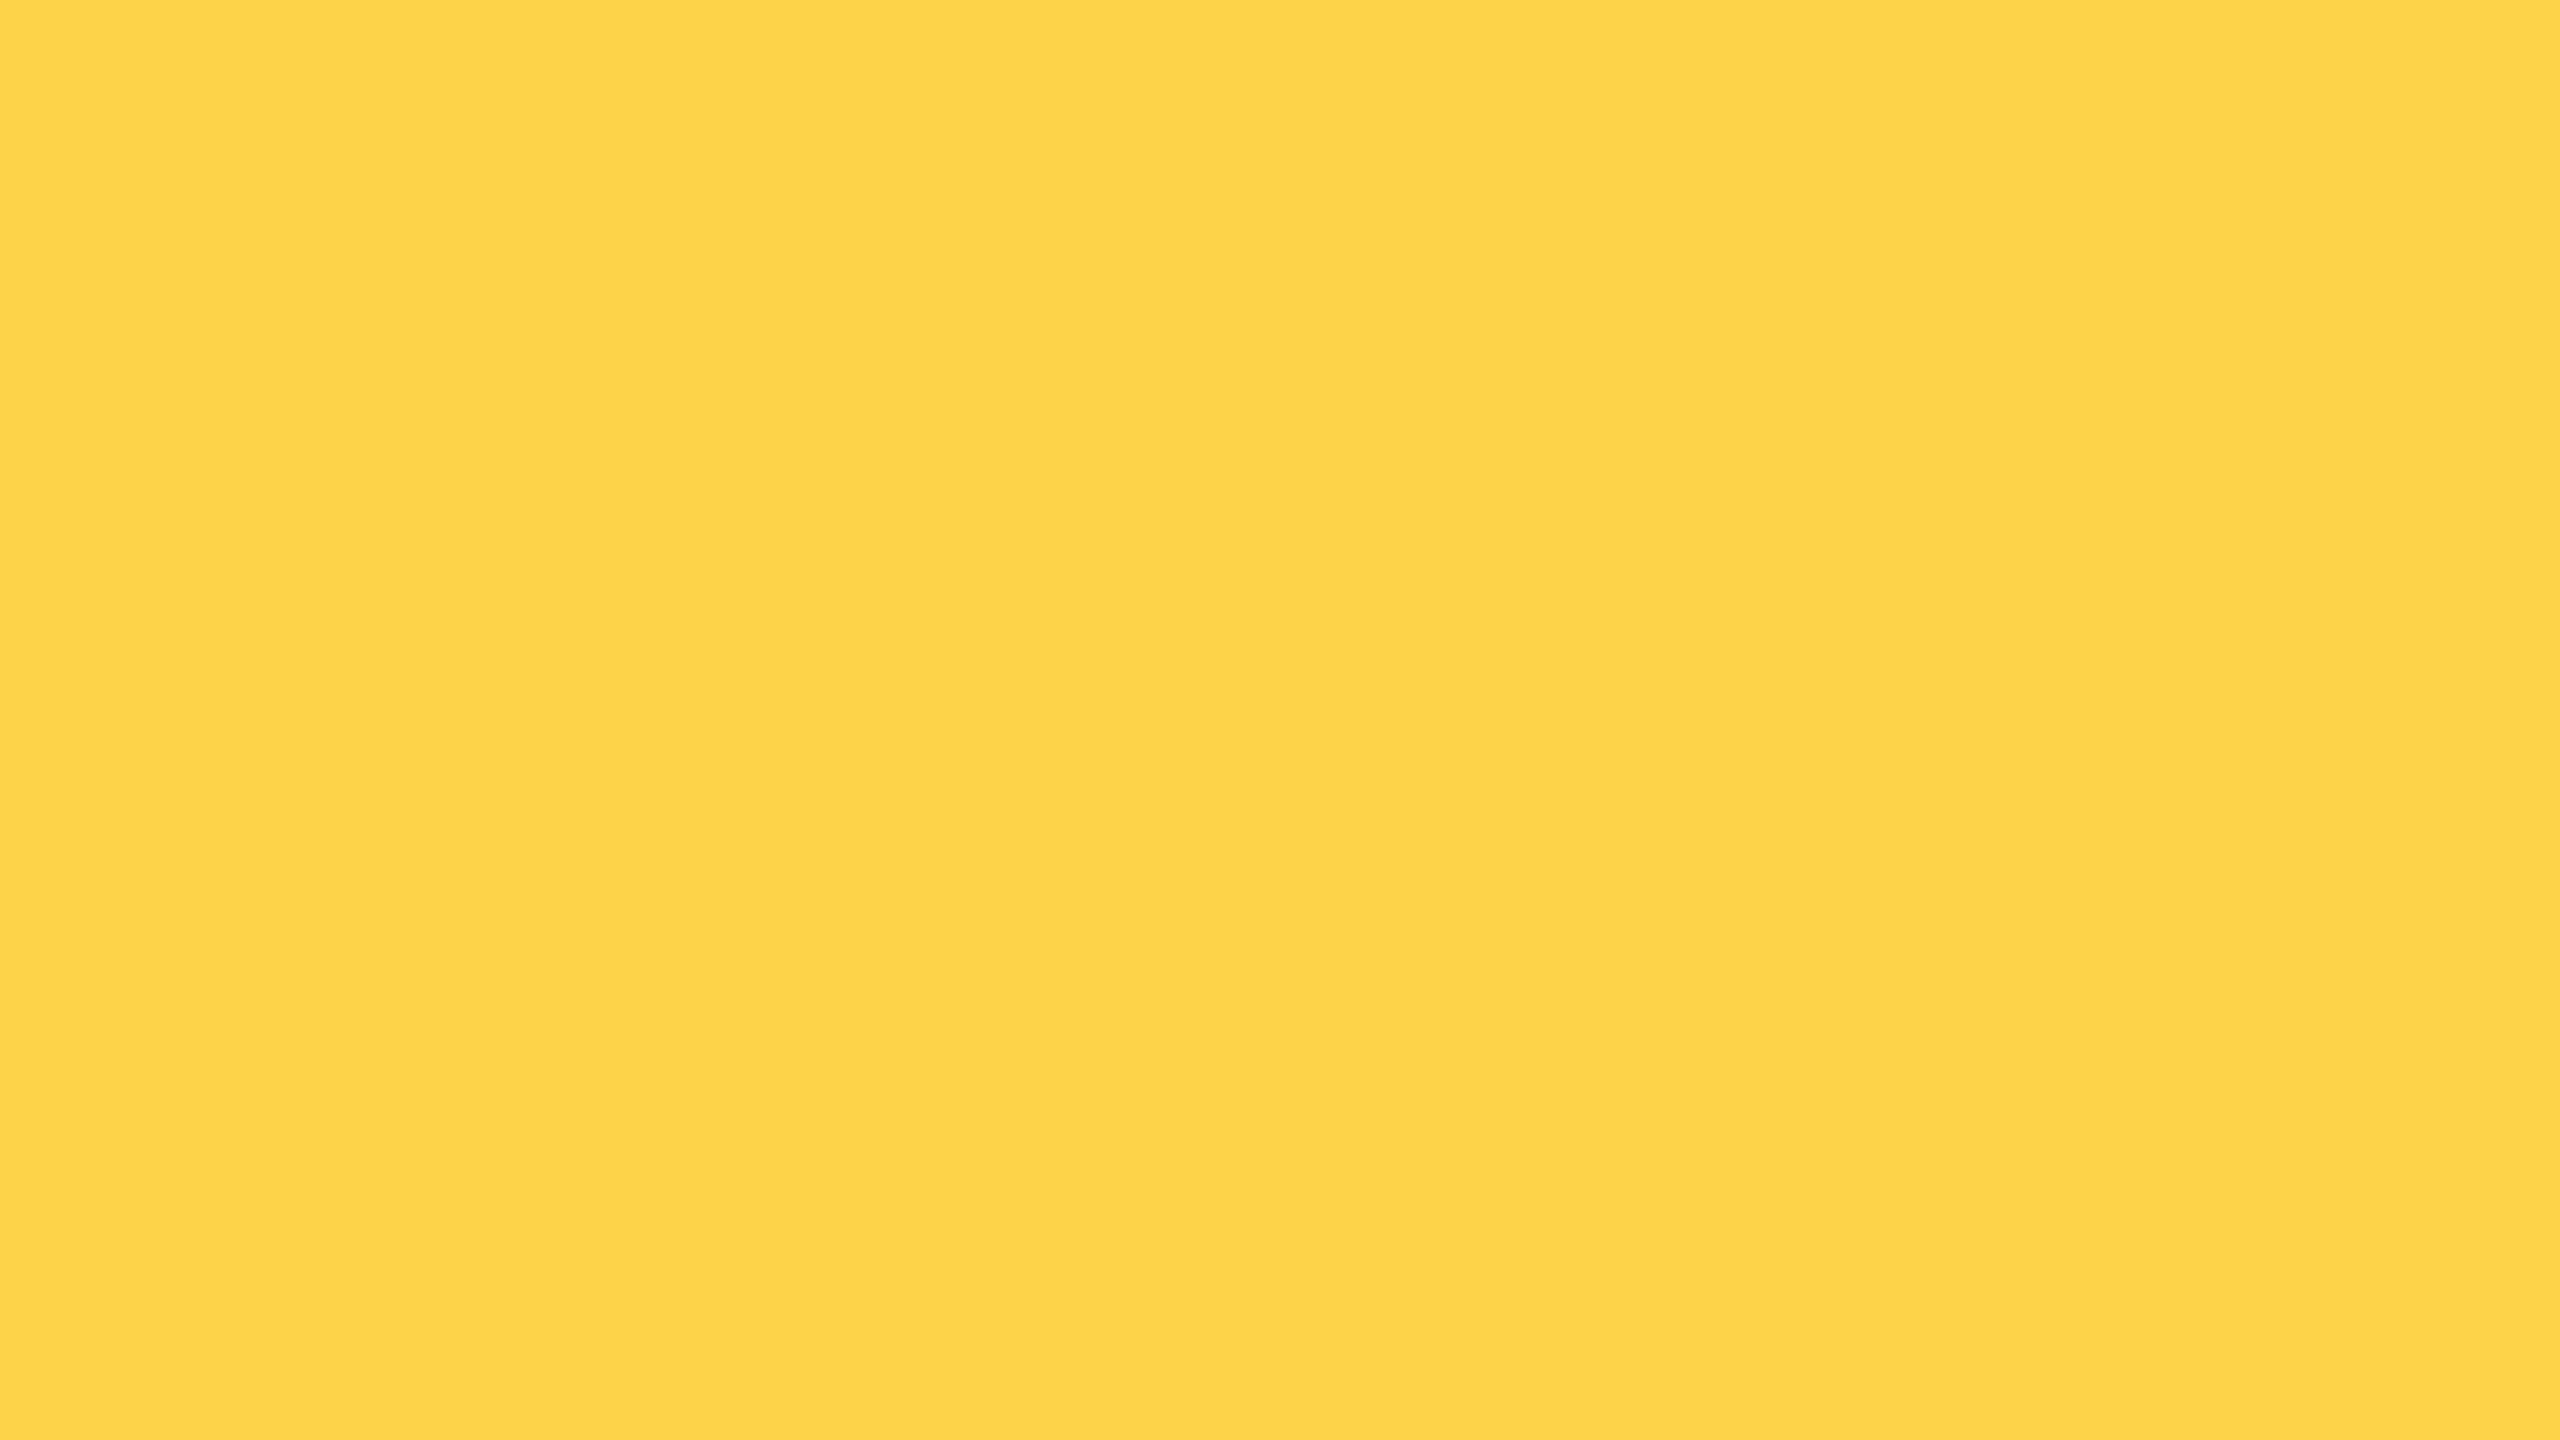 a plain yellow background